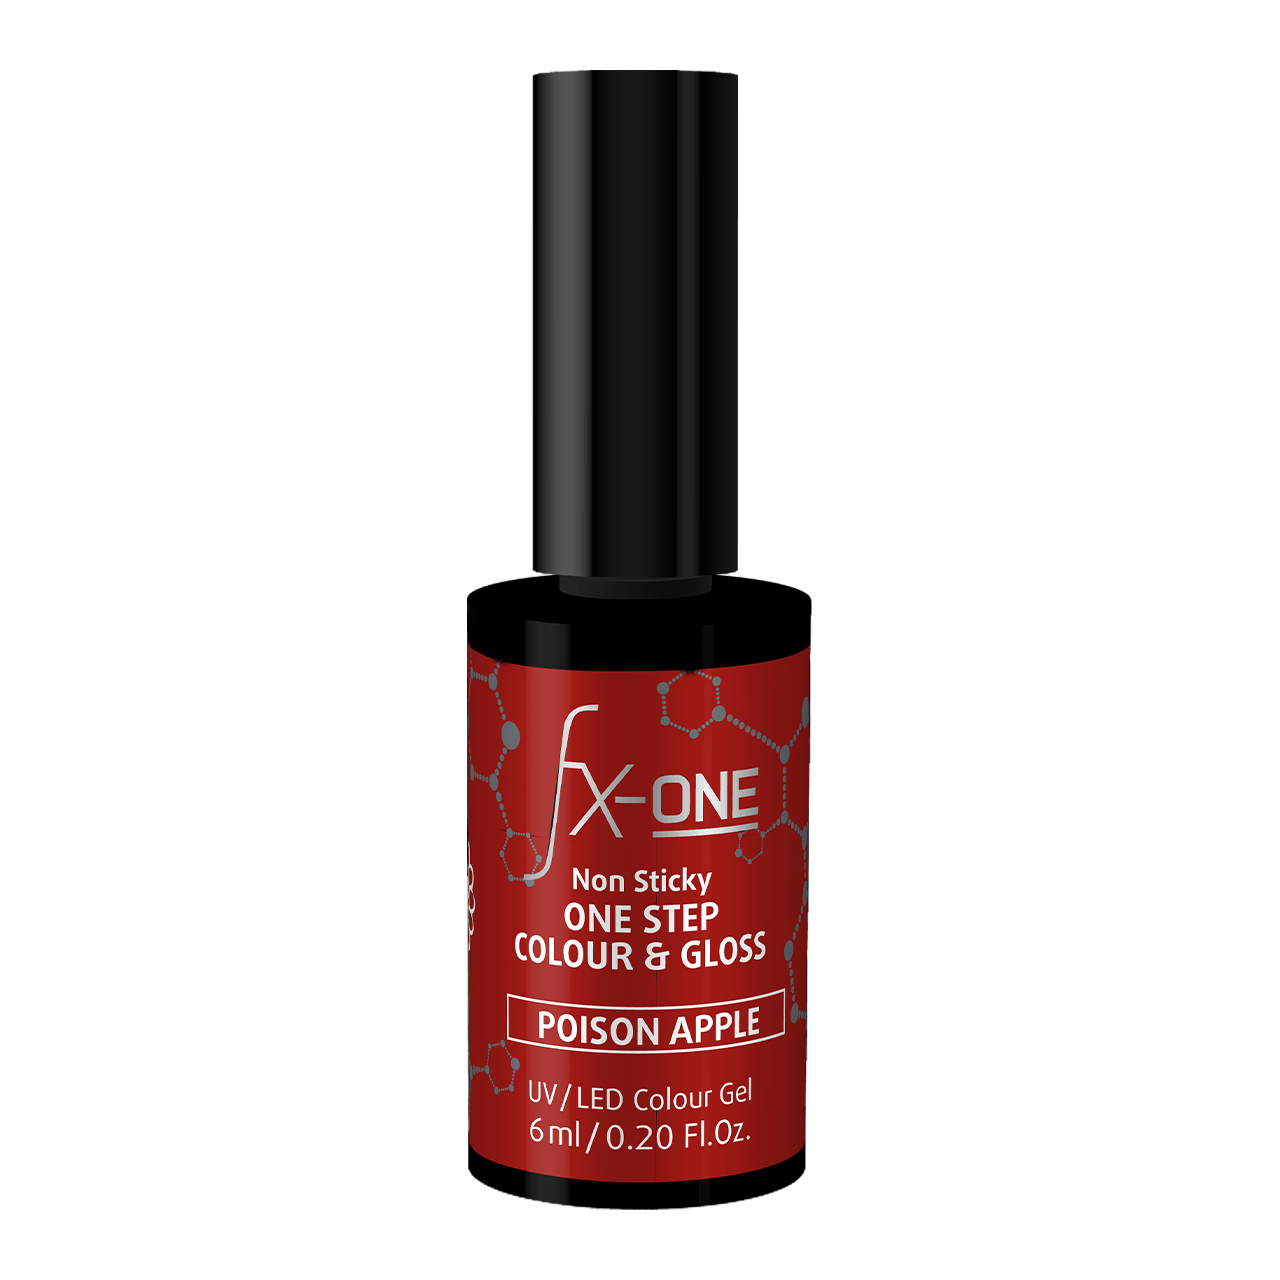 FX-ONE Colour & Gloss Poison Apple